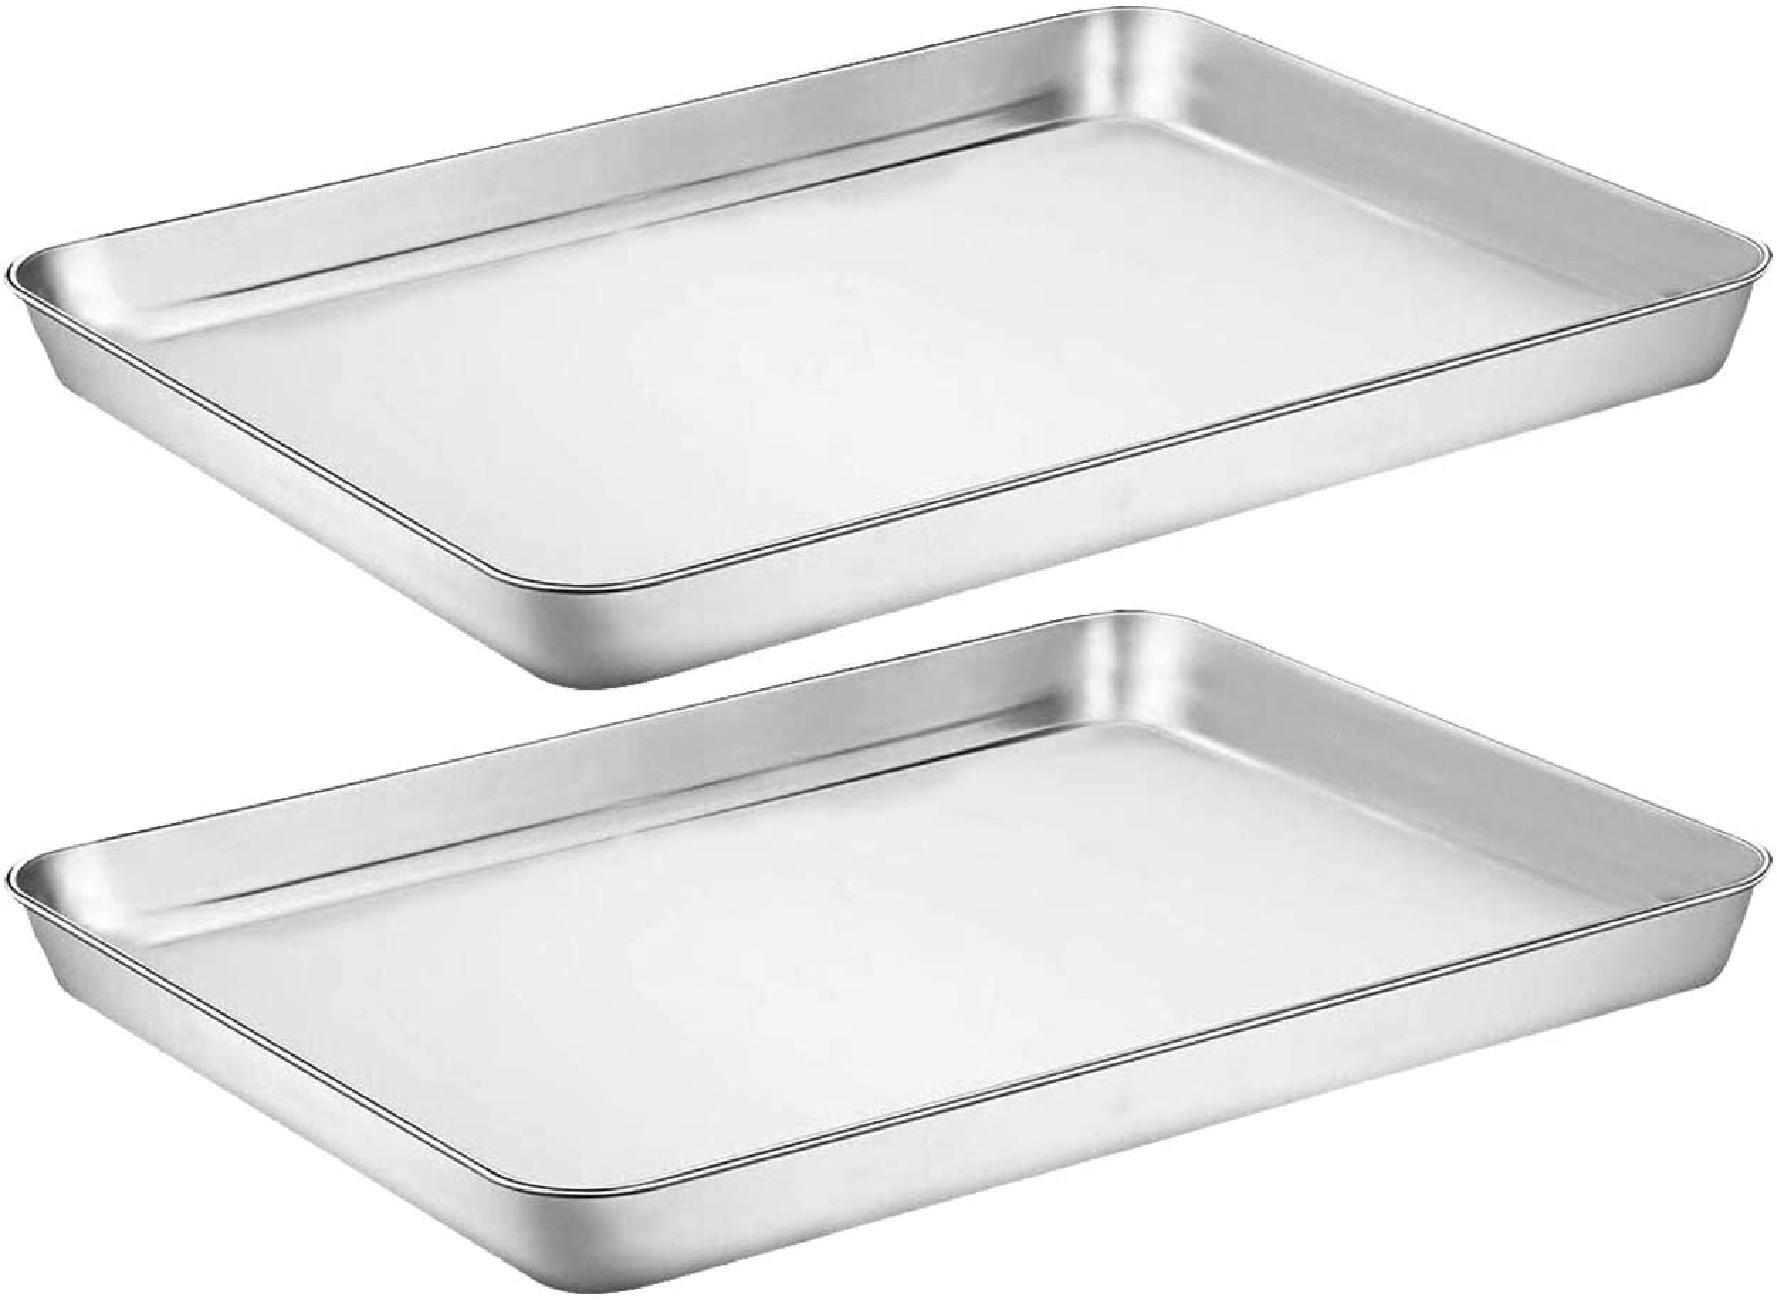 Bastwe 20 inch Stainless Steel Bakeware Baking Pans Healthy & Nontoxic & Rustproof & Easy Clean & Dishwasher Safe Baking Sheets Set of 2 